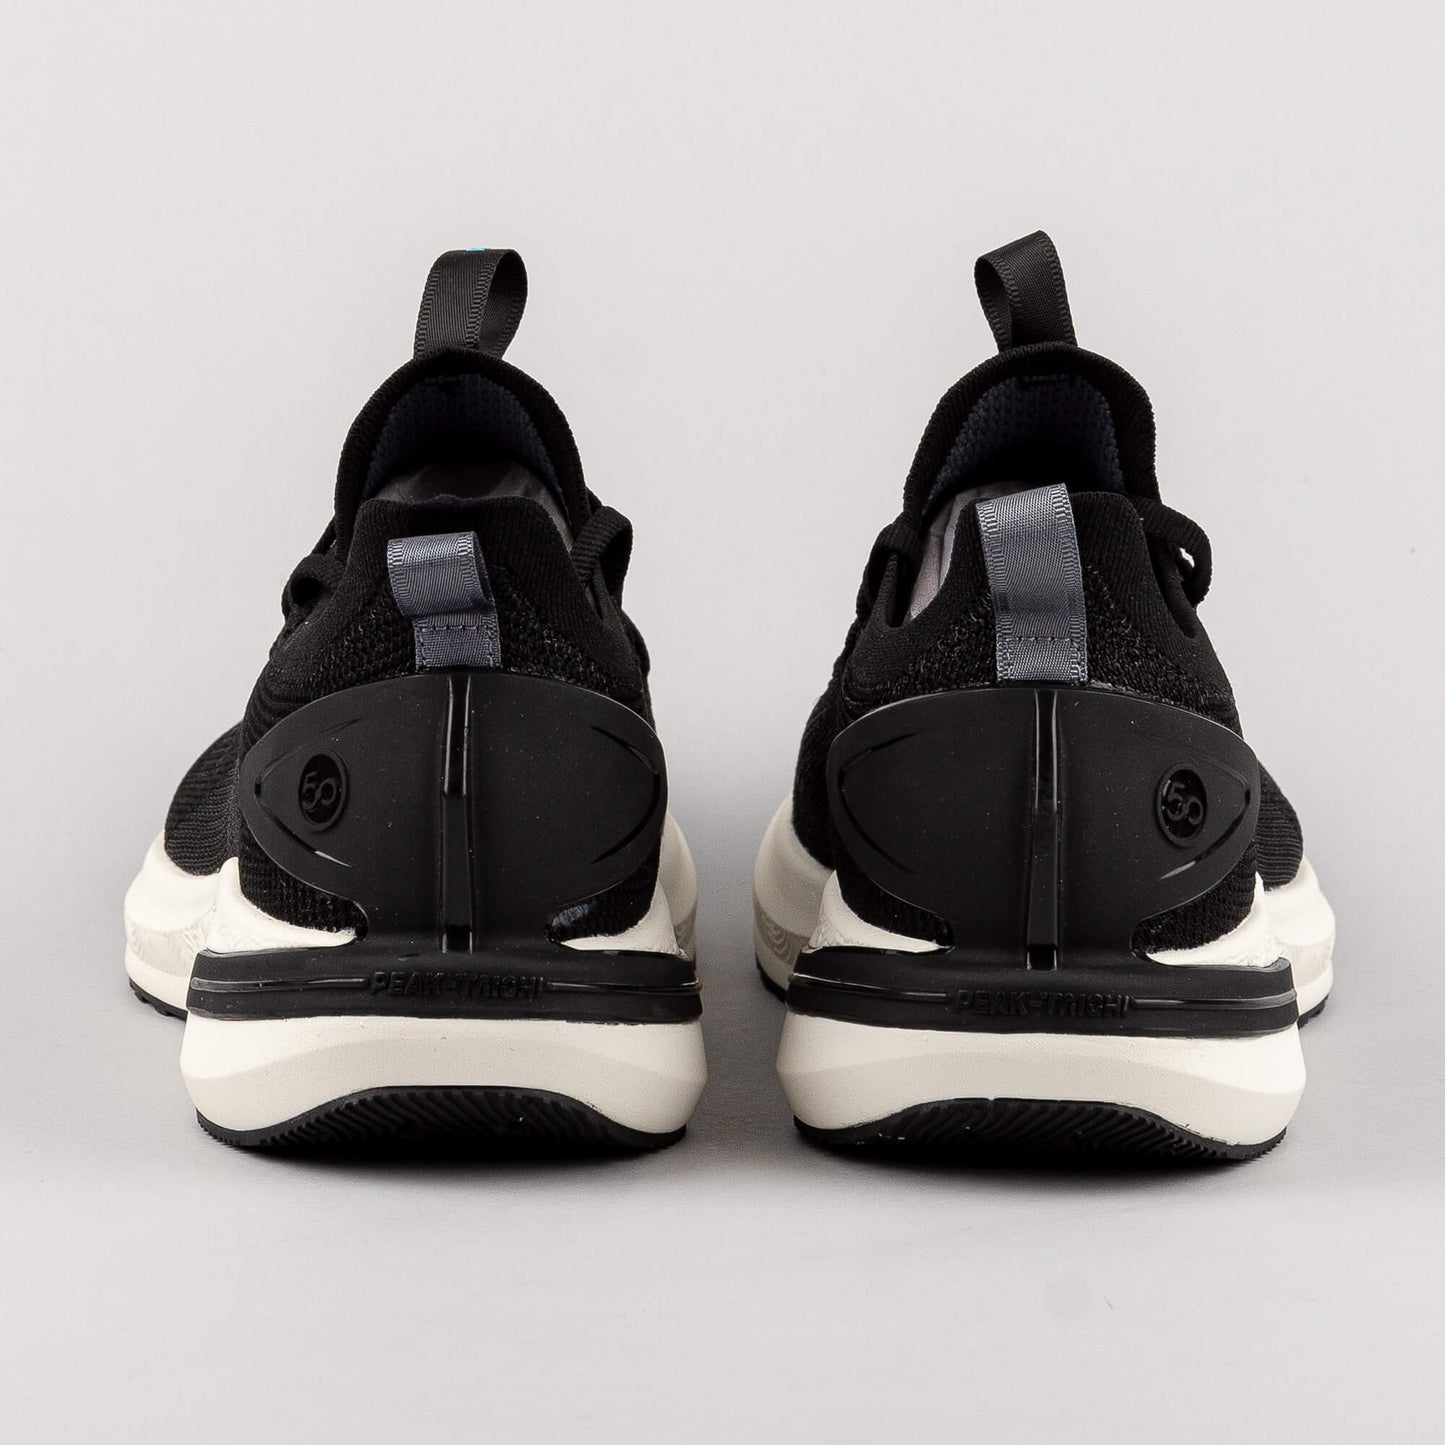 Peak Running Shoes Tai Chi 5.0 Black/Beige